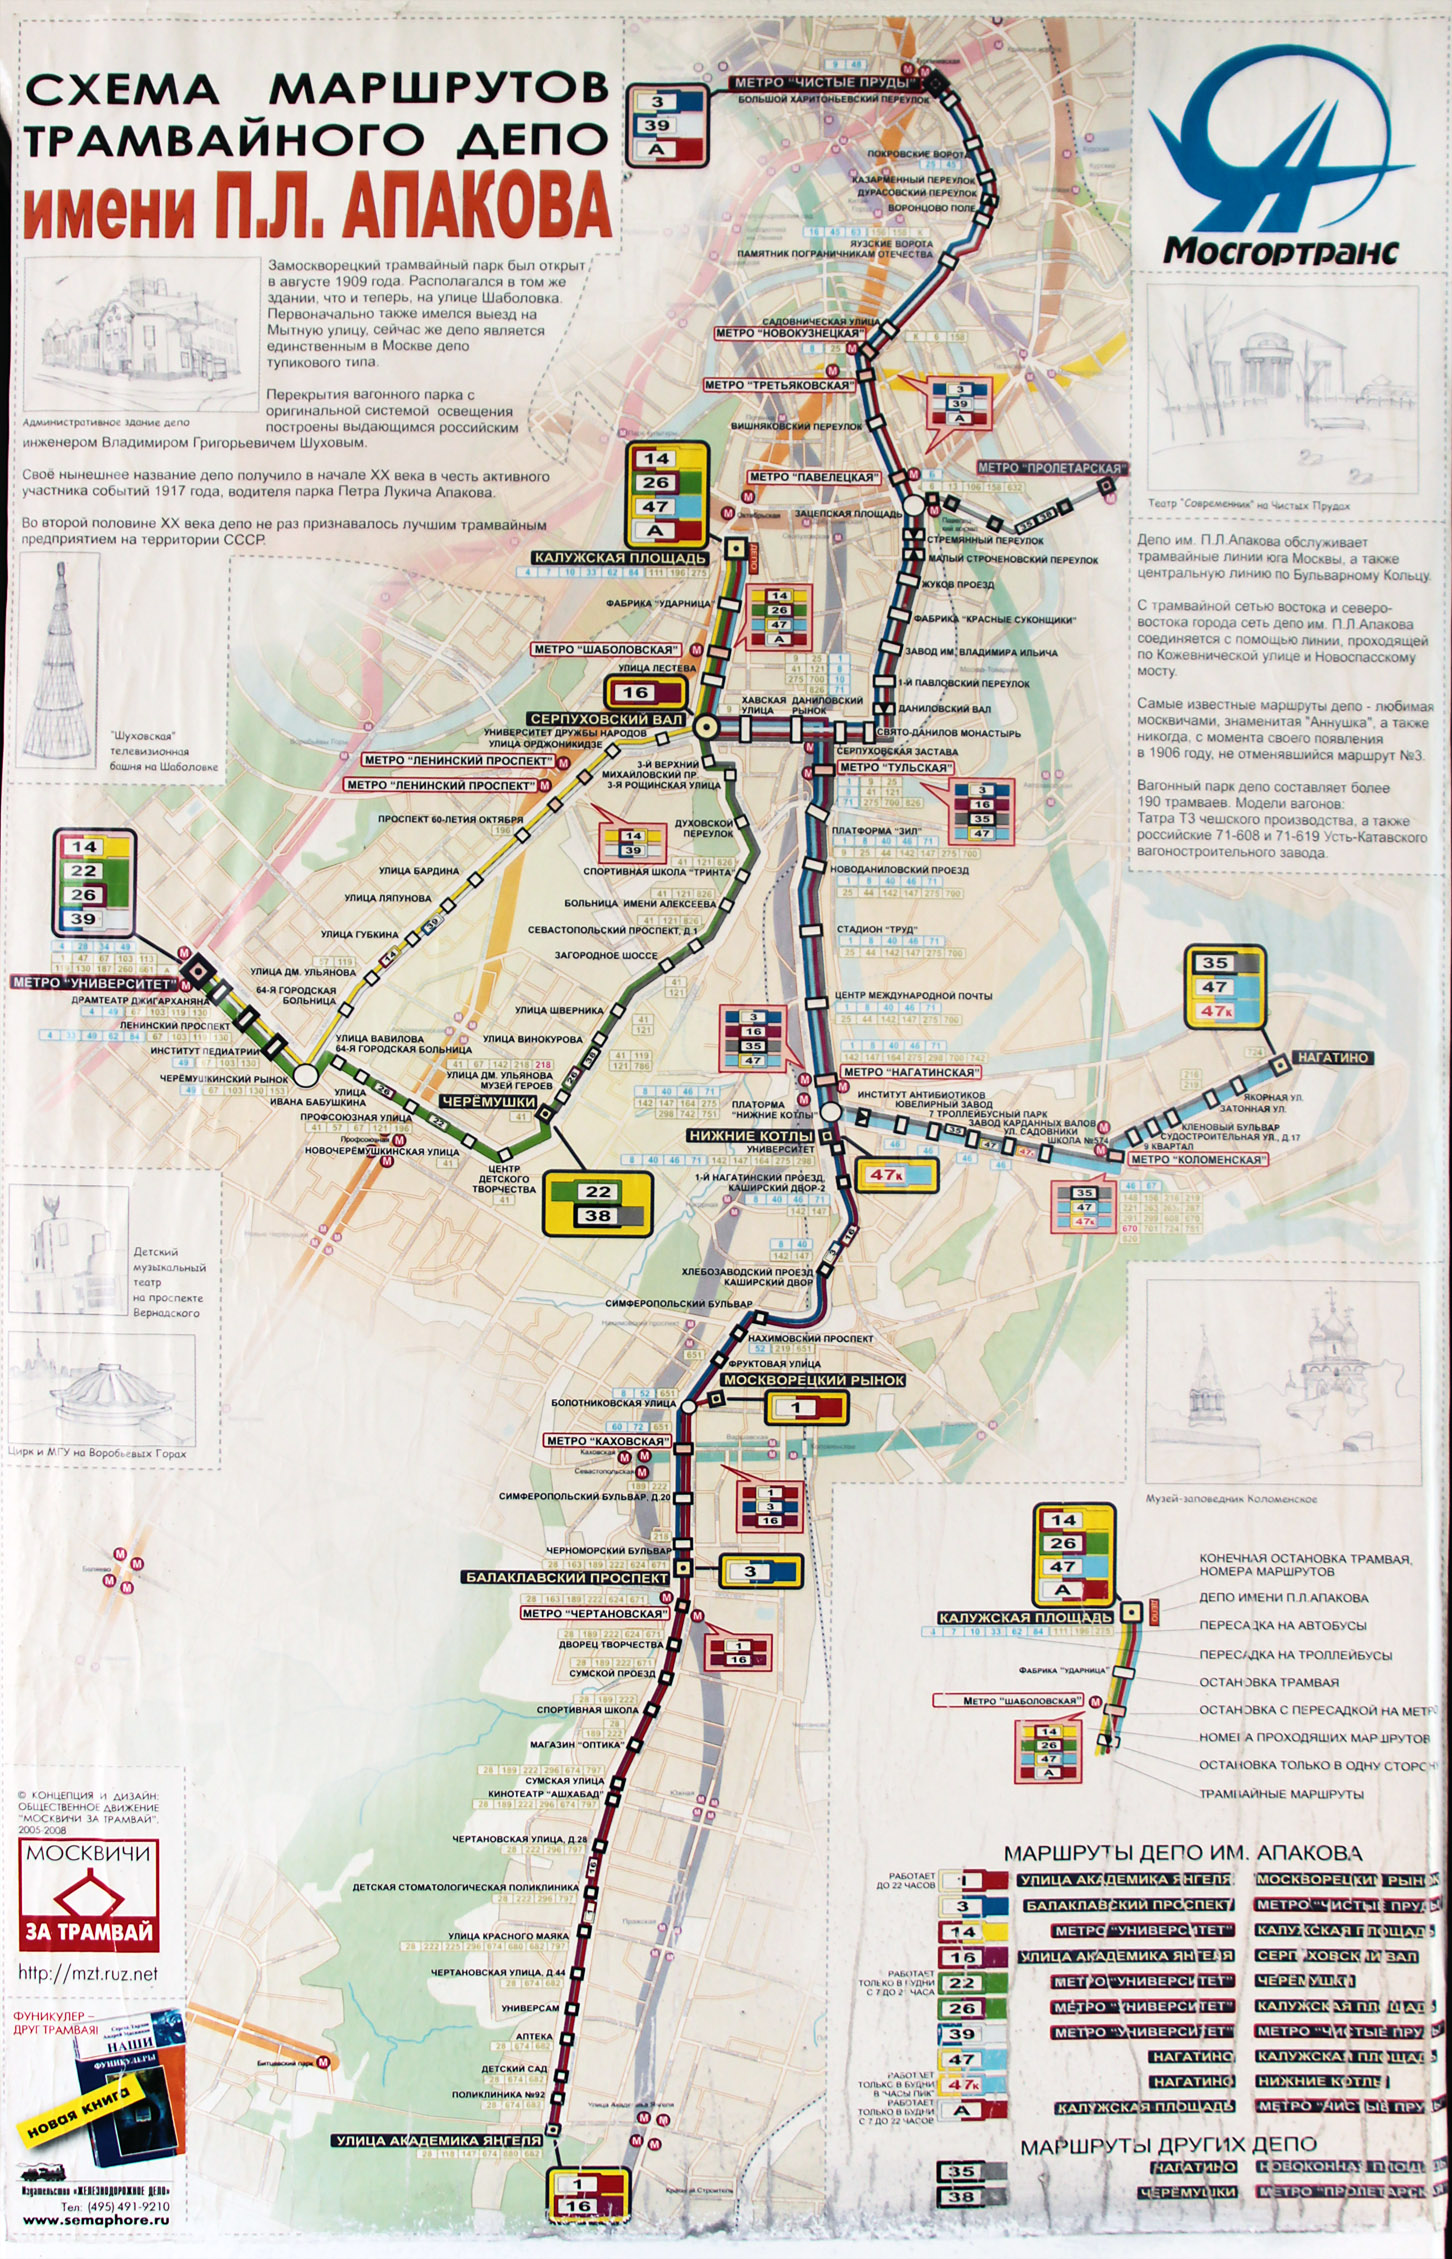 Moskva — Maps inside vehicles (tram)